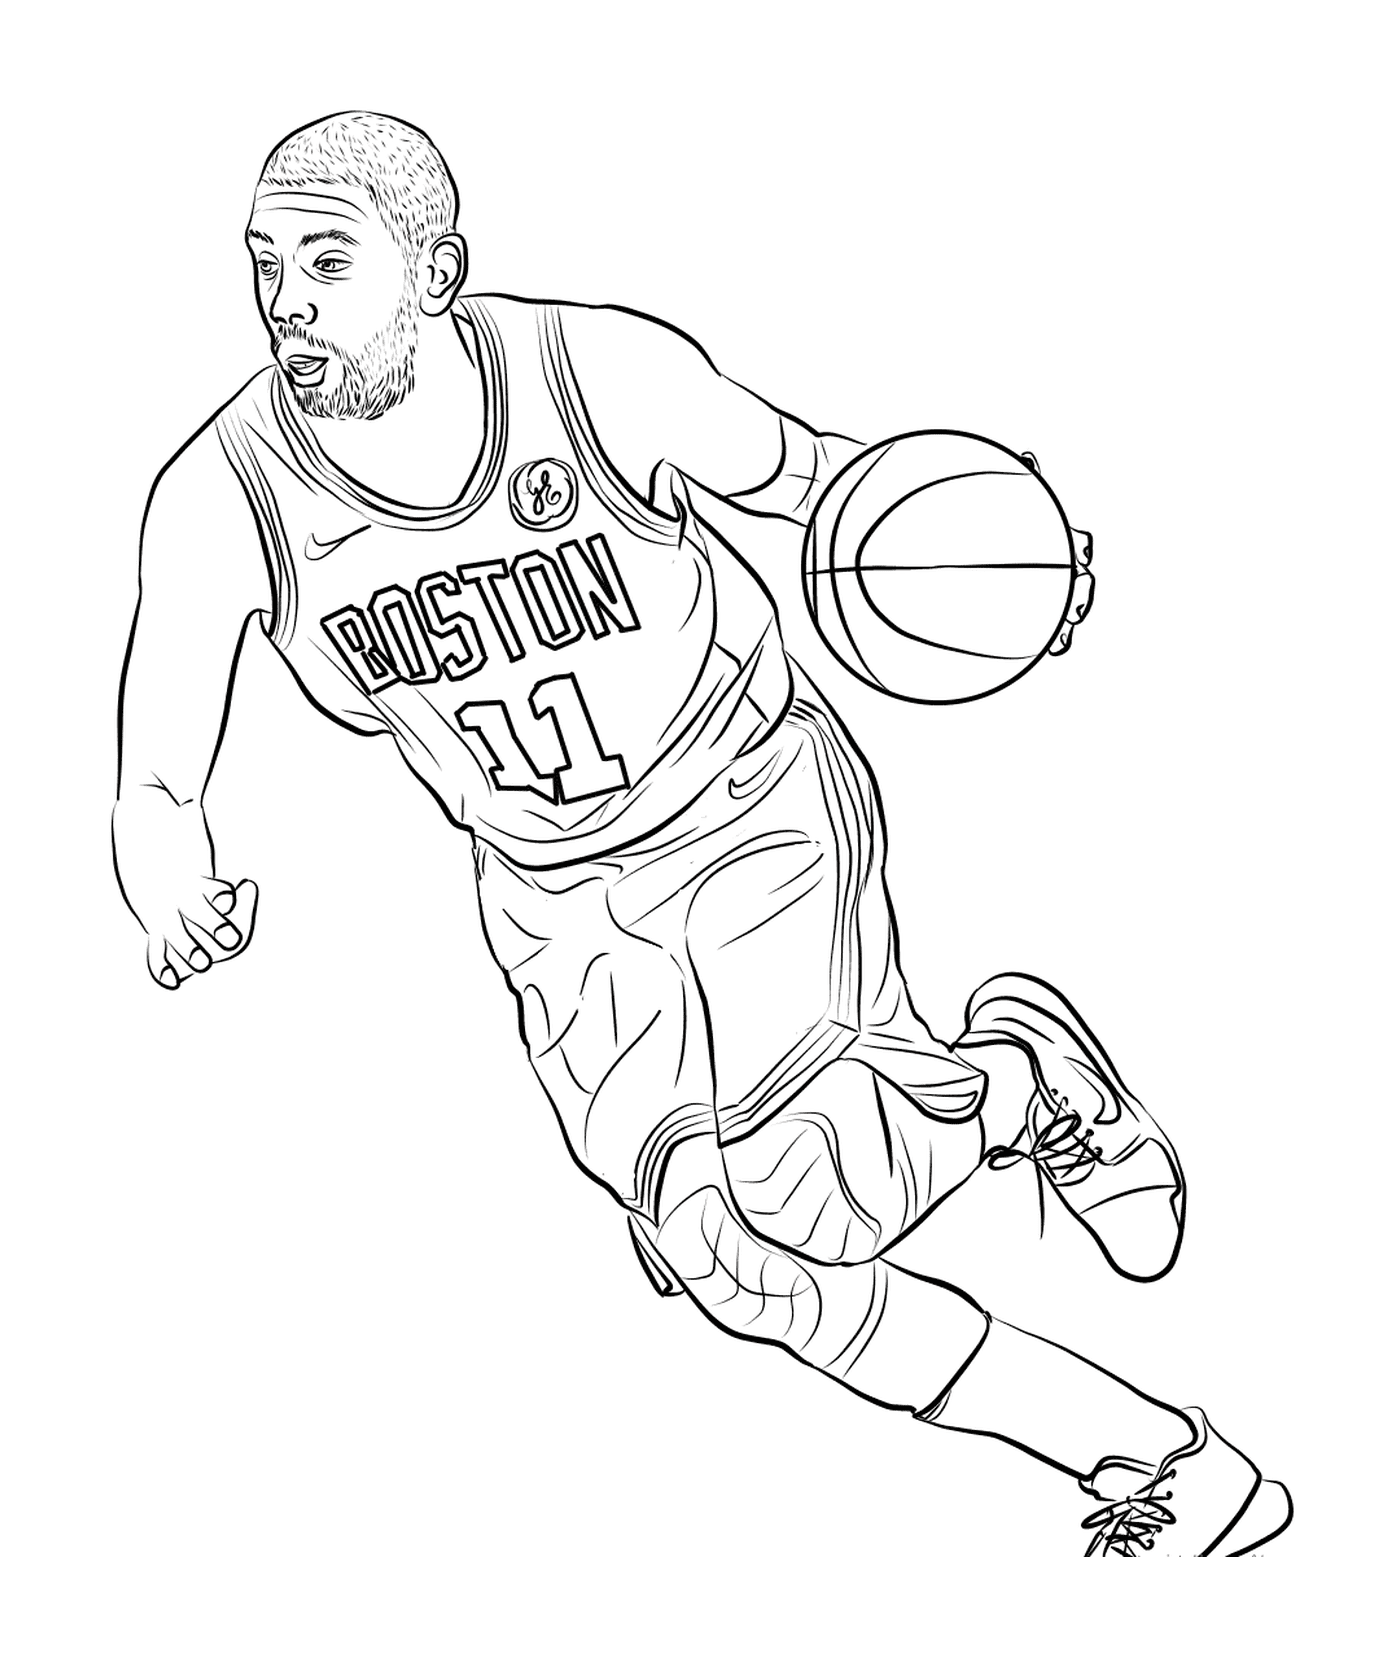   Kyrie Irving joue au basketball 